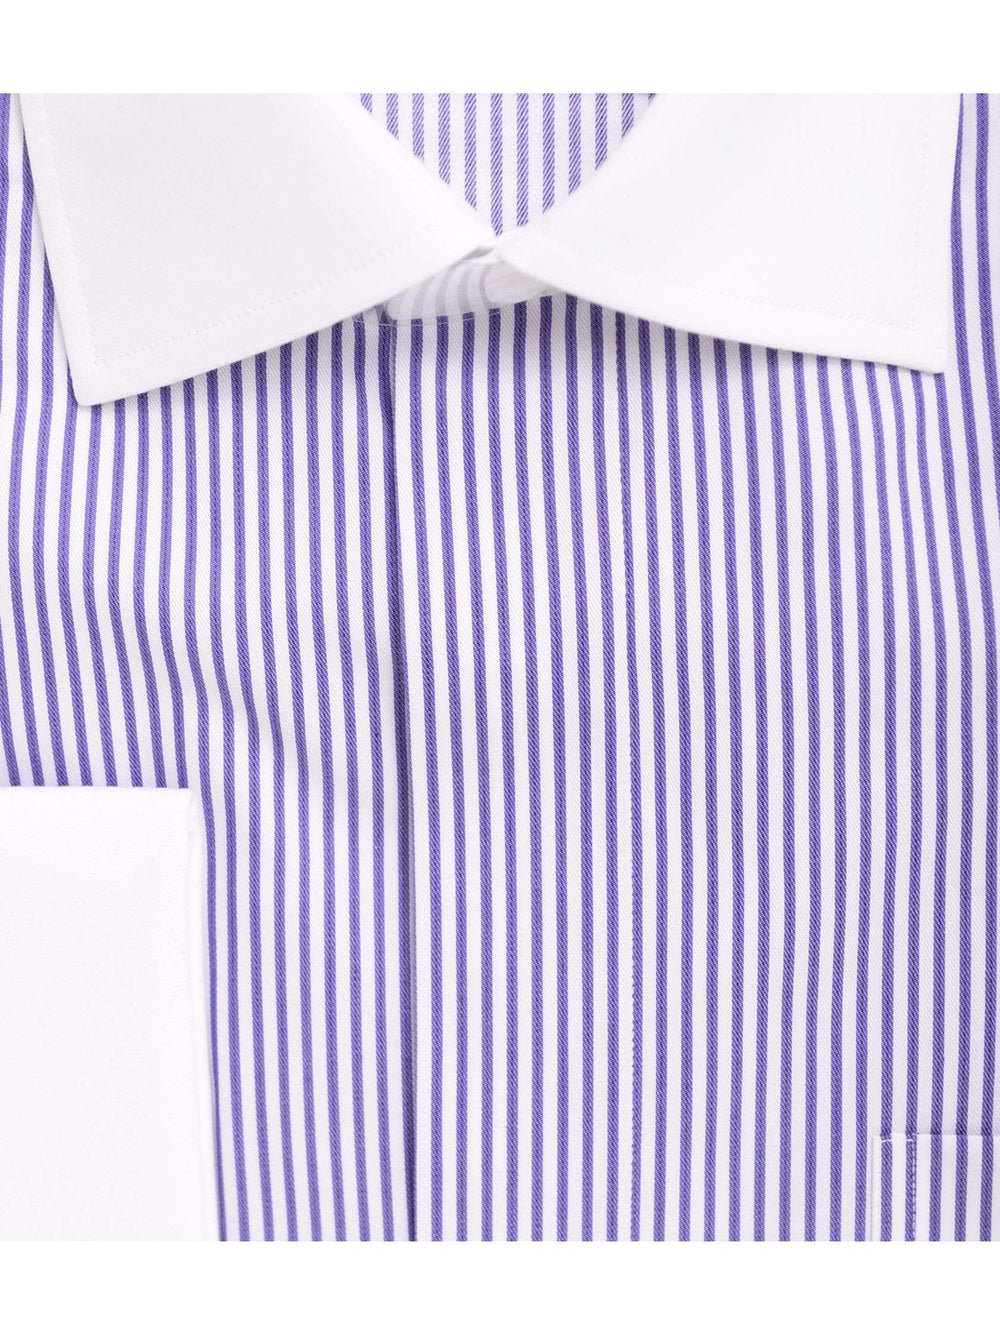 Men's Dress Shirts - Contrast Collar Style | The Suit Depot